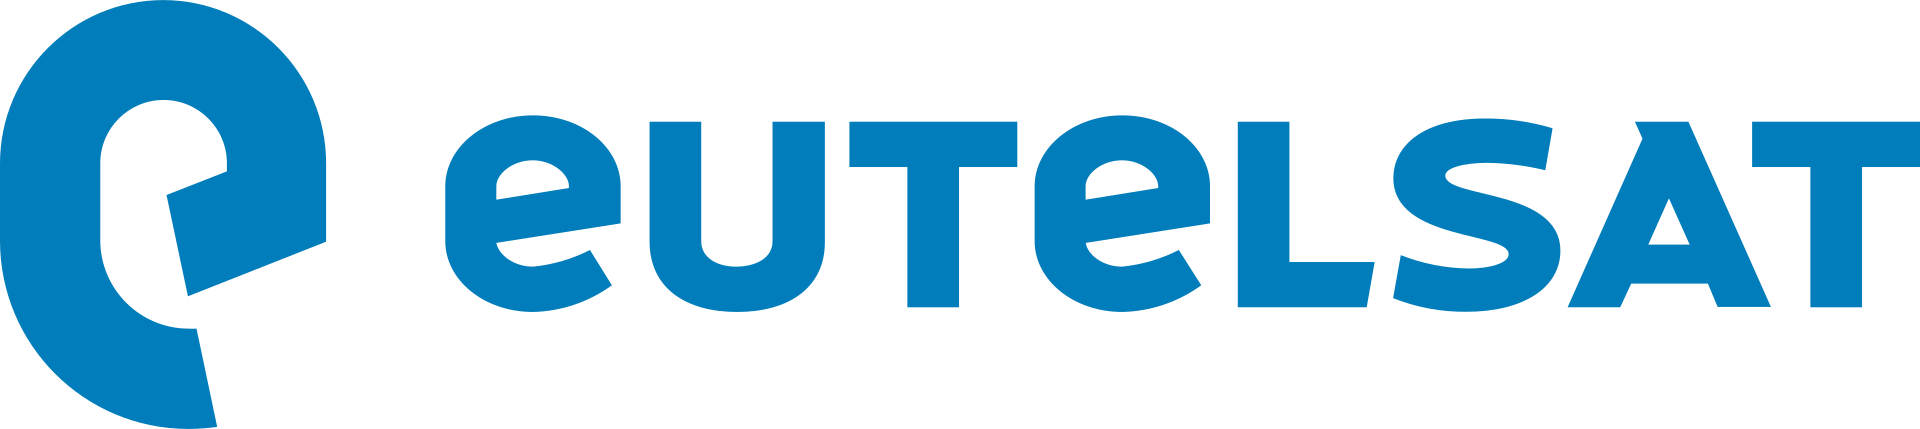 Eutelsat - European Telecommunications Satellite Organization - Европейская организация спутниковой связи